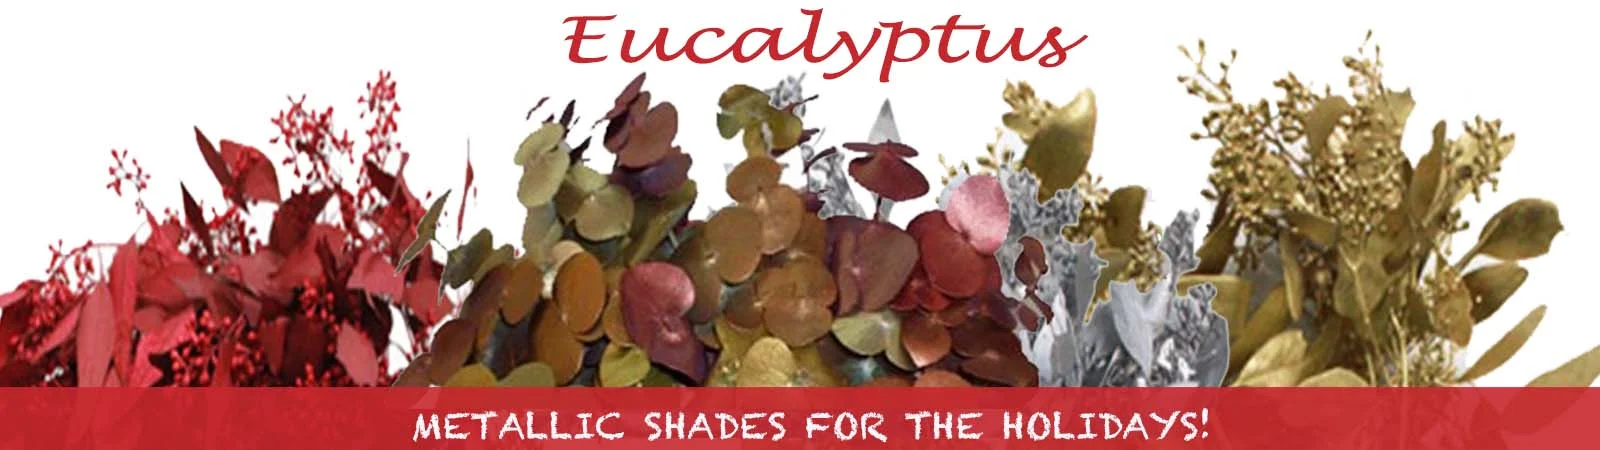 Eucalyptus adding a fresh, festive touch to holiday decor with their vibrant hue.